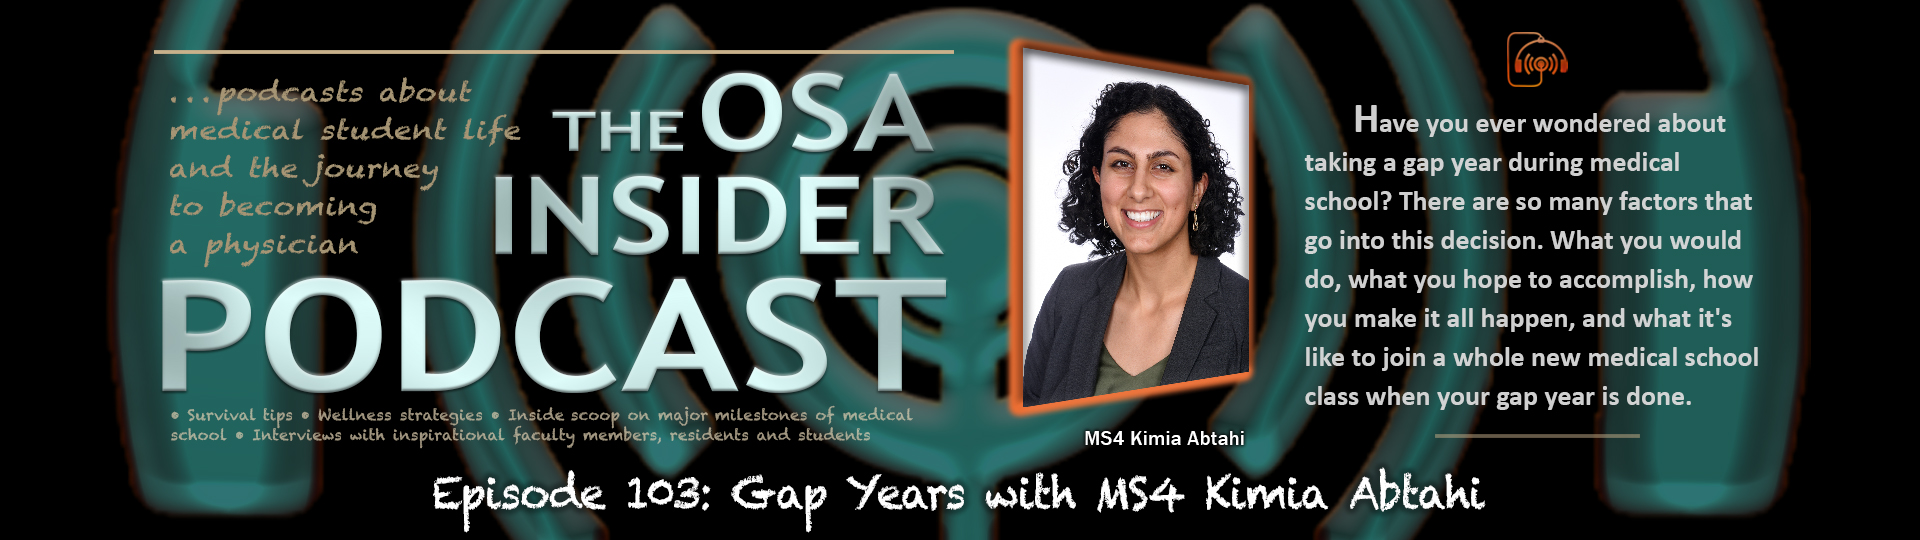 The OSA Insider Podcast